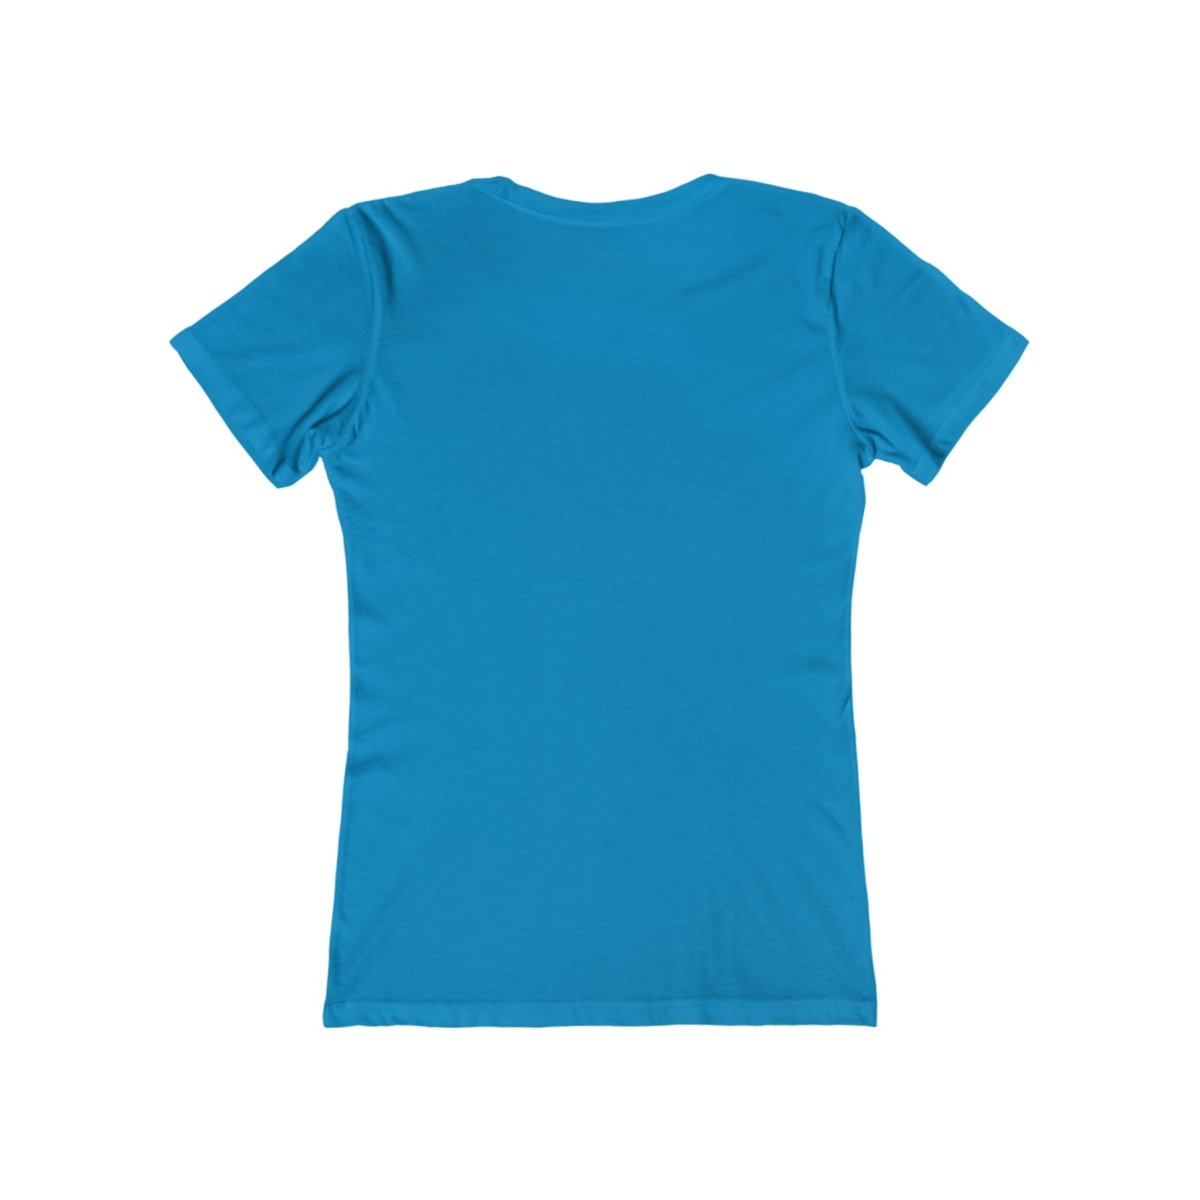 Earn Your Stripes Women's Premium Slim-Fit T-Shirt, Razzle Dazzle, Leadership Training